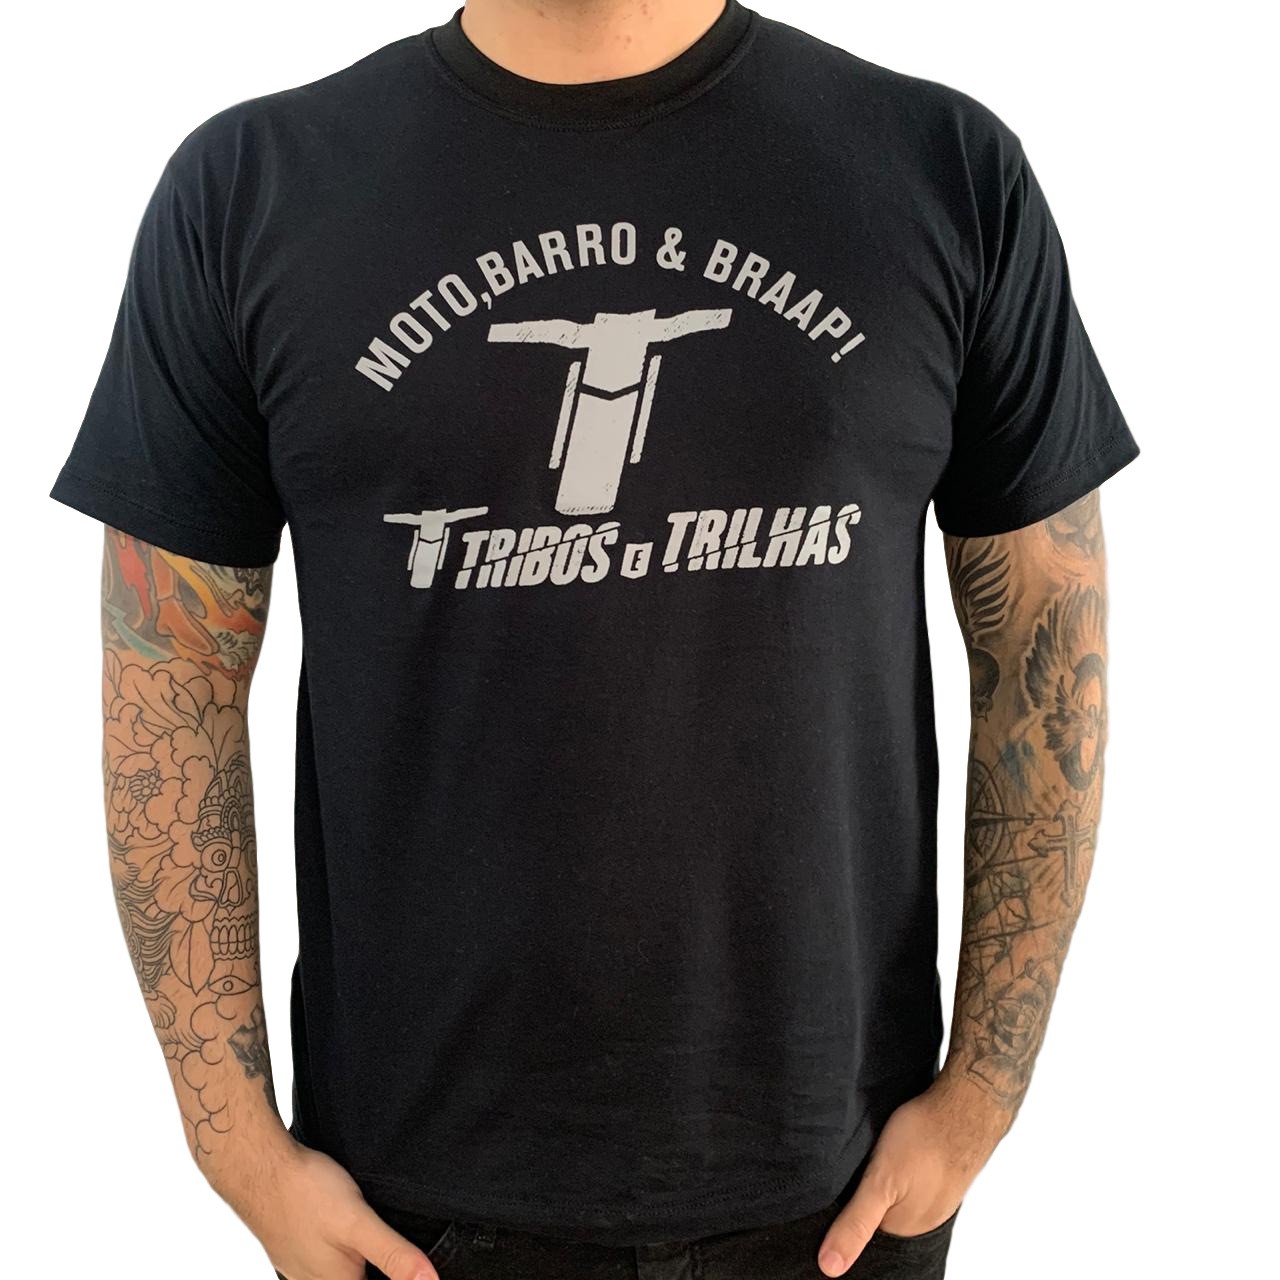 Camiseta Casual Tribos e Trilhas Moto, Barro & Braap!